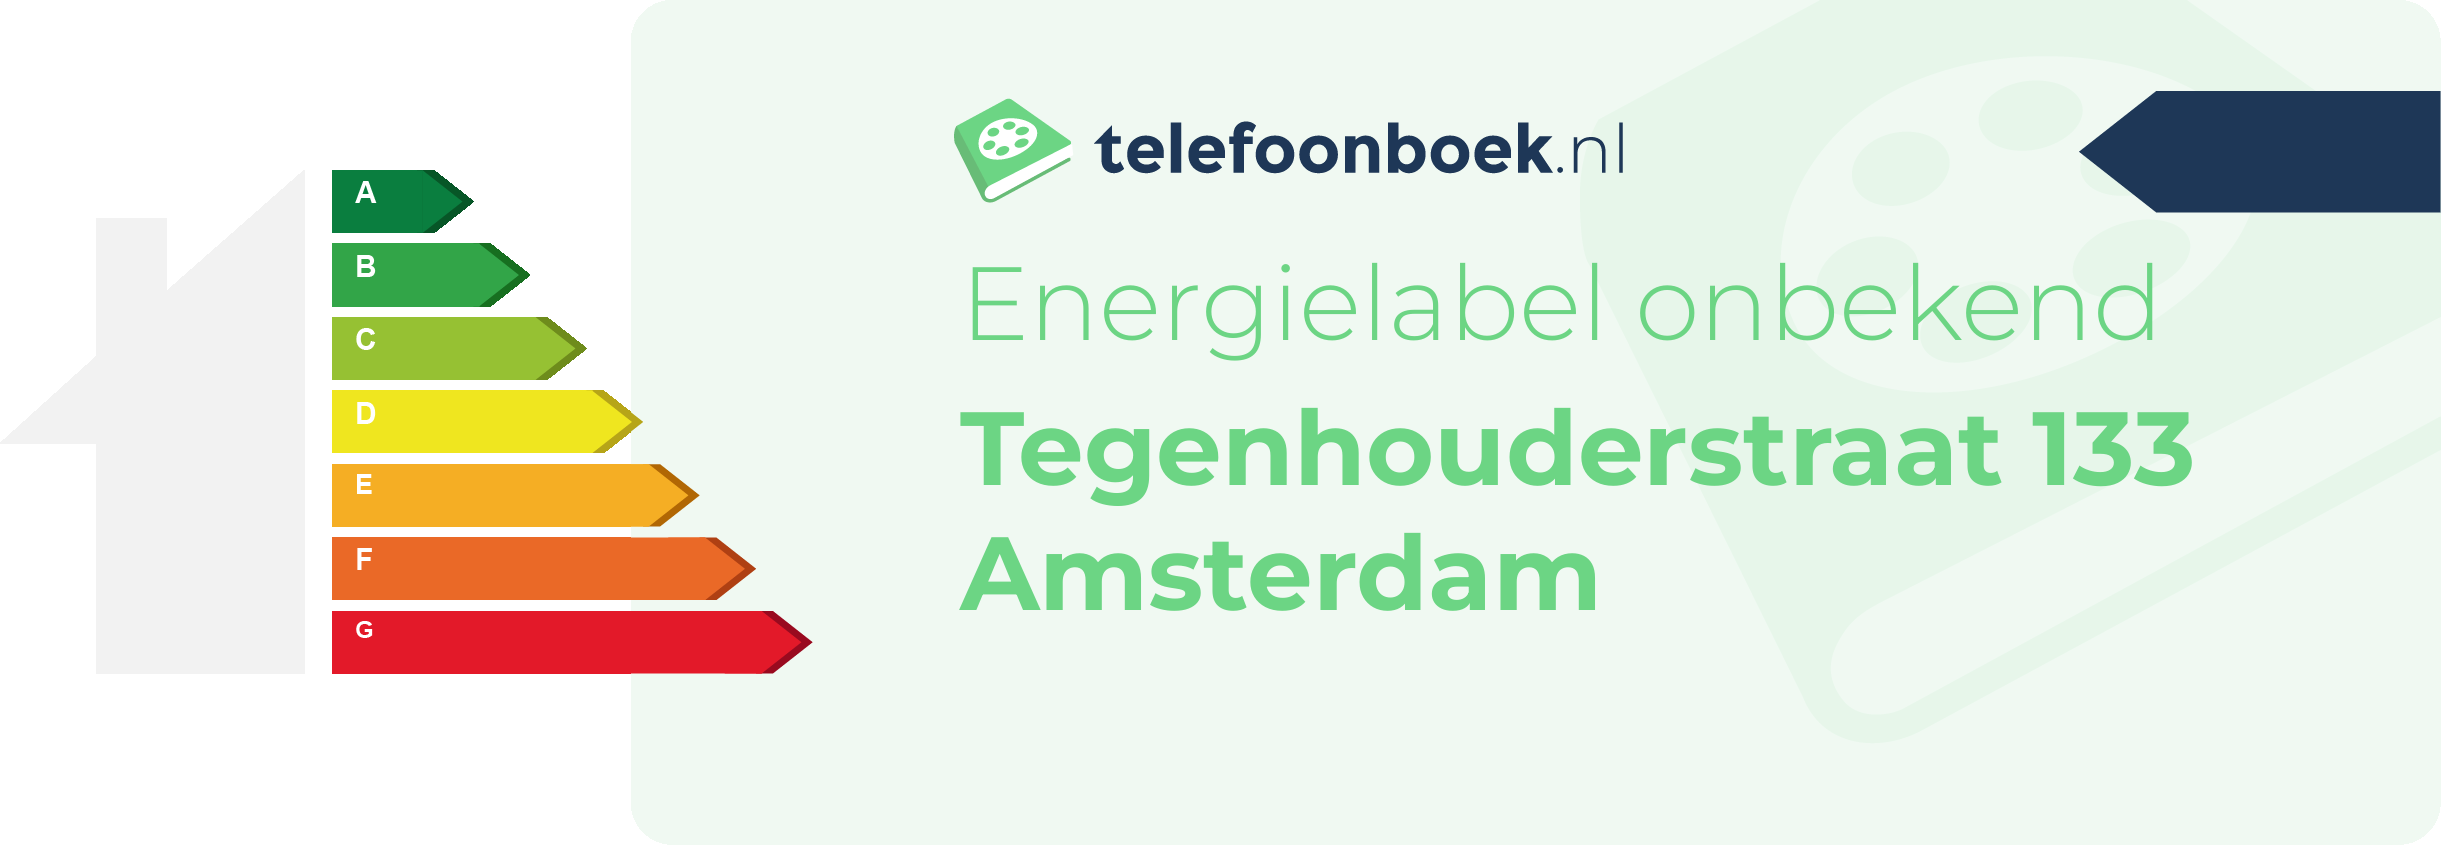 Energielabel Tegenhouderstraat 133 Amsterdam